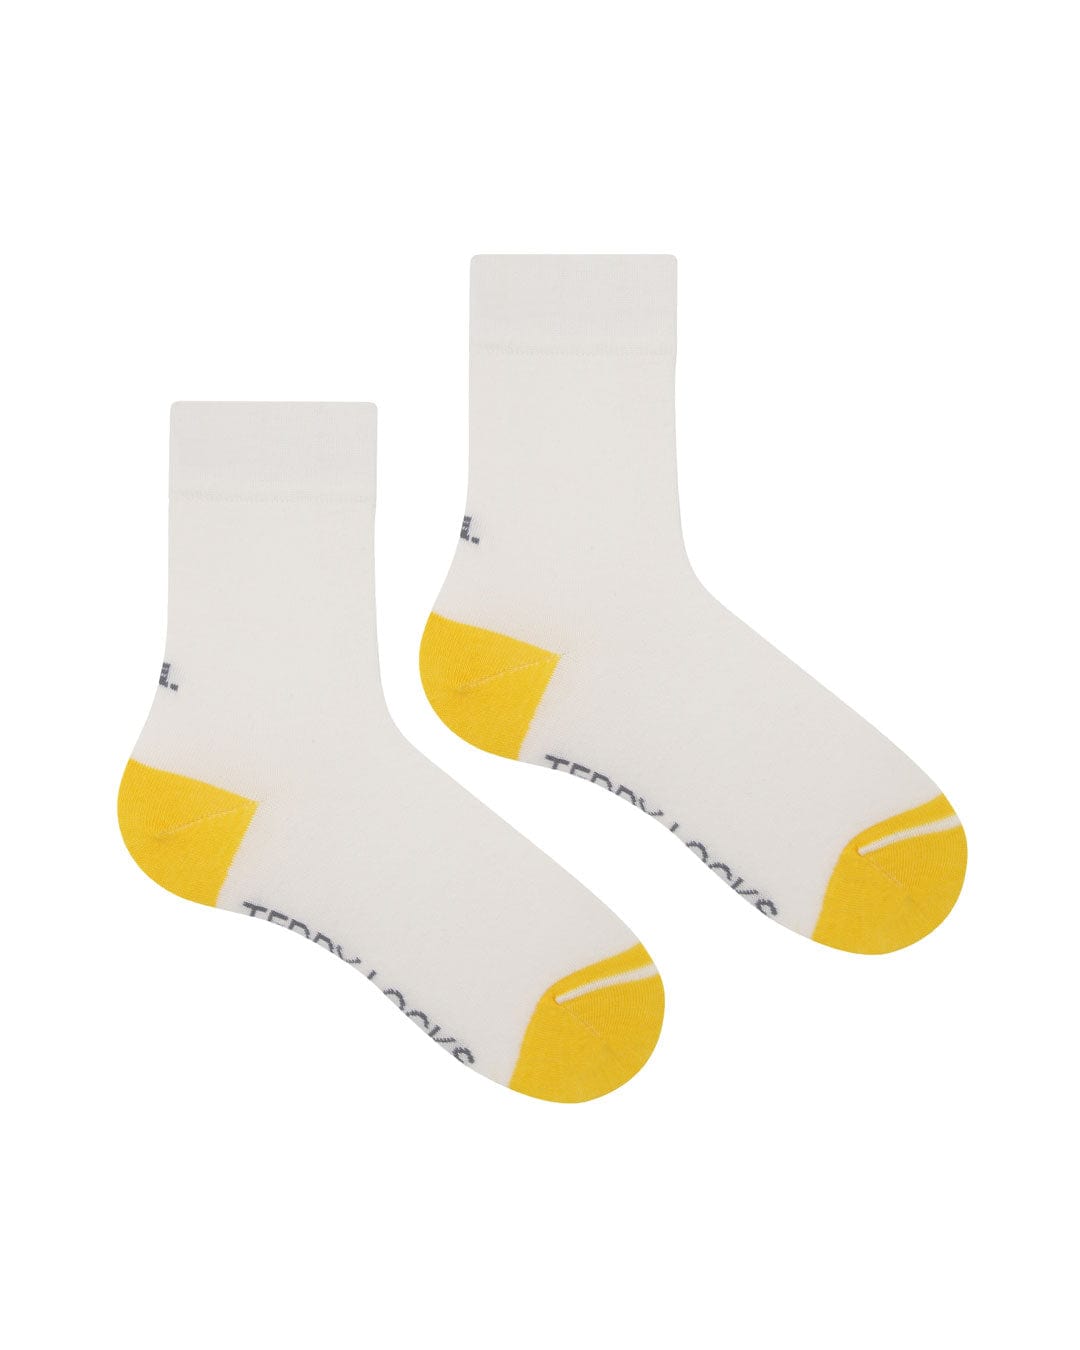 Ecofriendly white crew socks. Sustainable everyday crew length socks